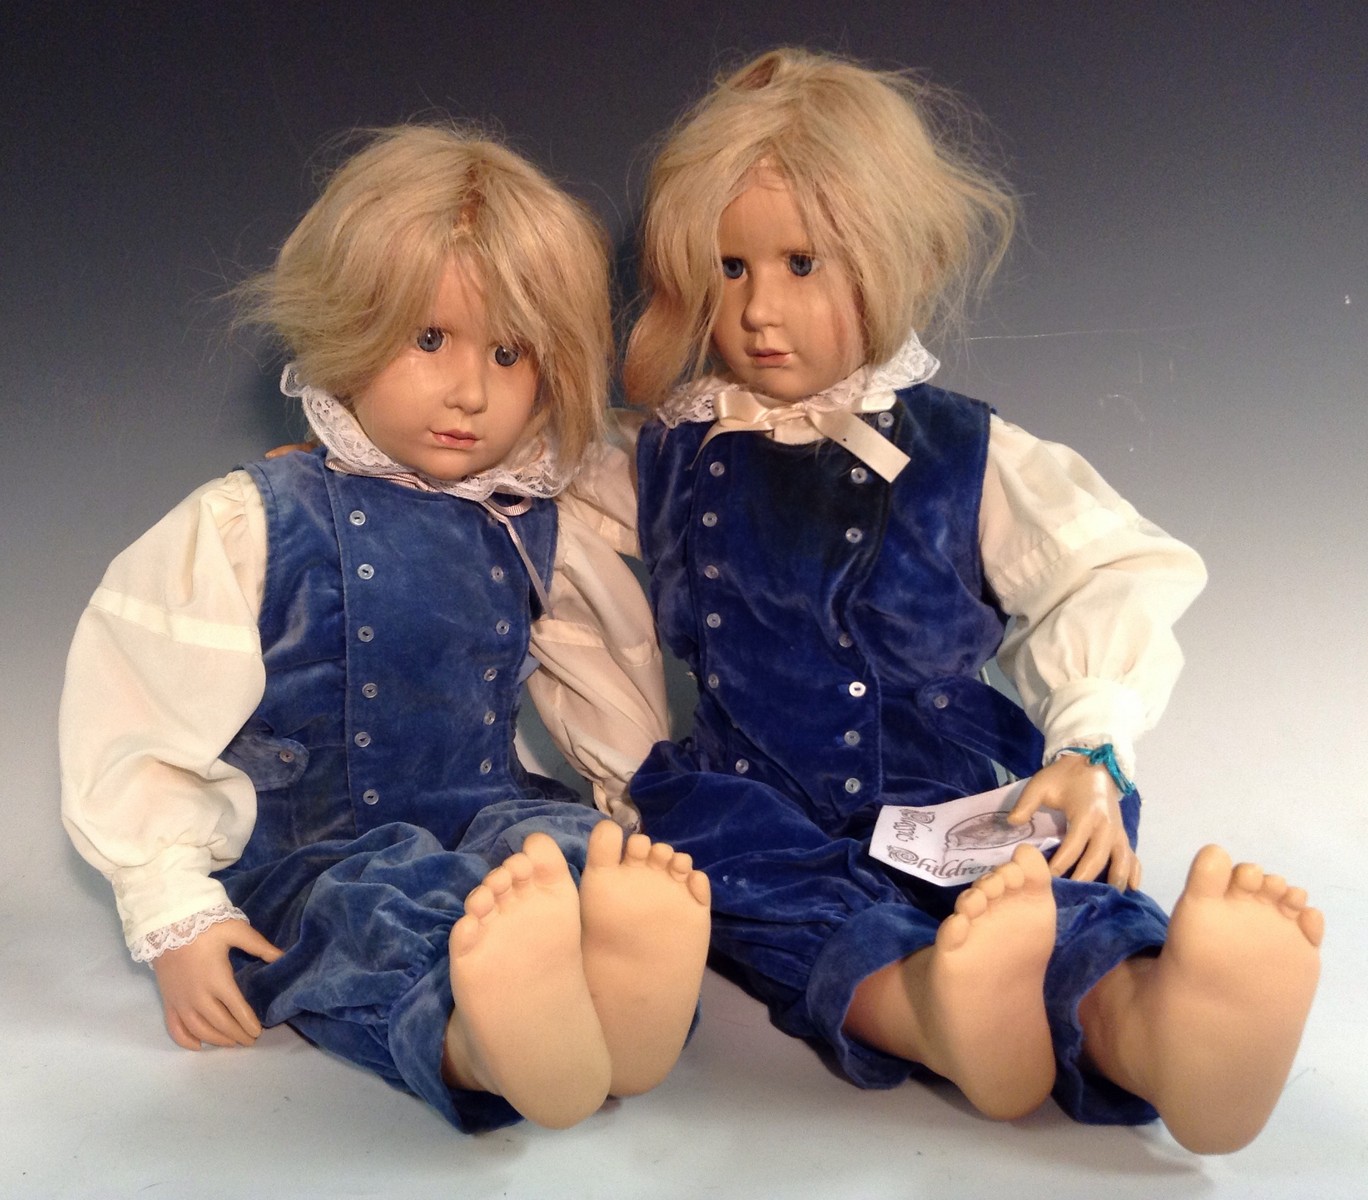 Hildegard Gunzel - a pair of Celluloid dolls, the Twins, fixed blue eyes, blond wigs,